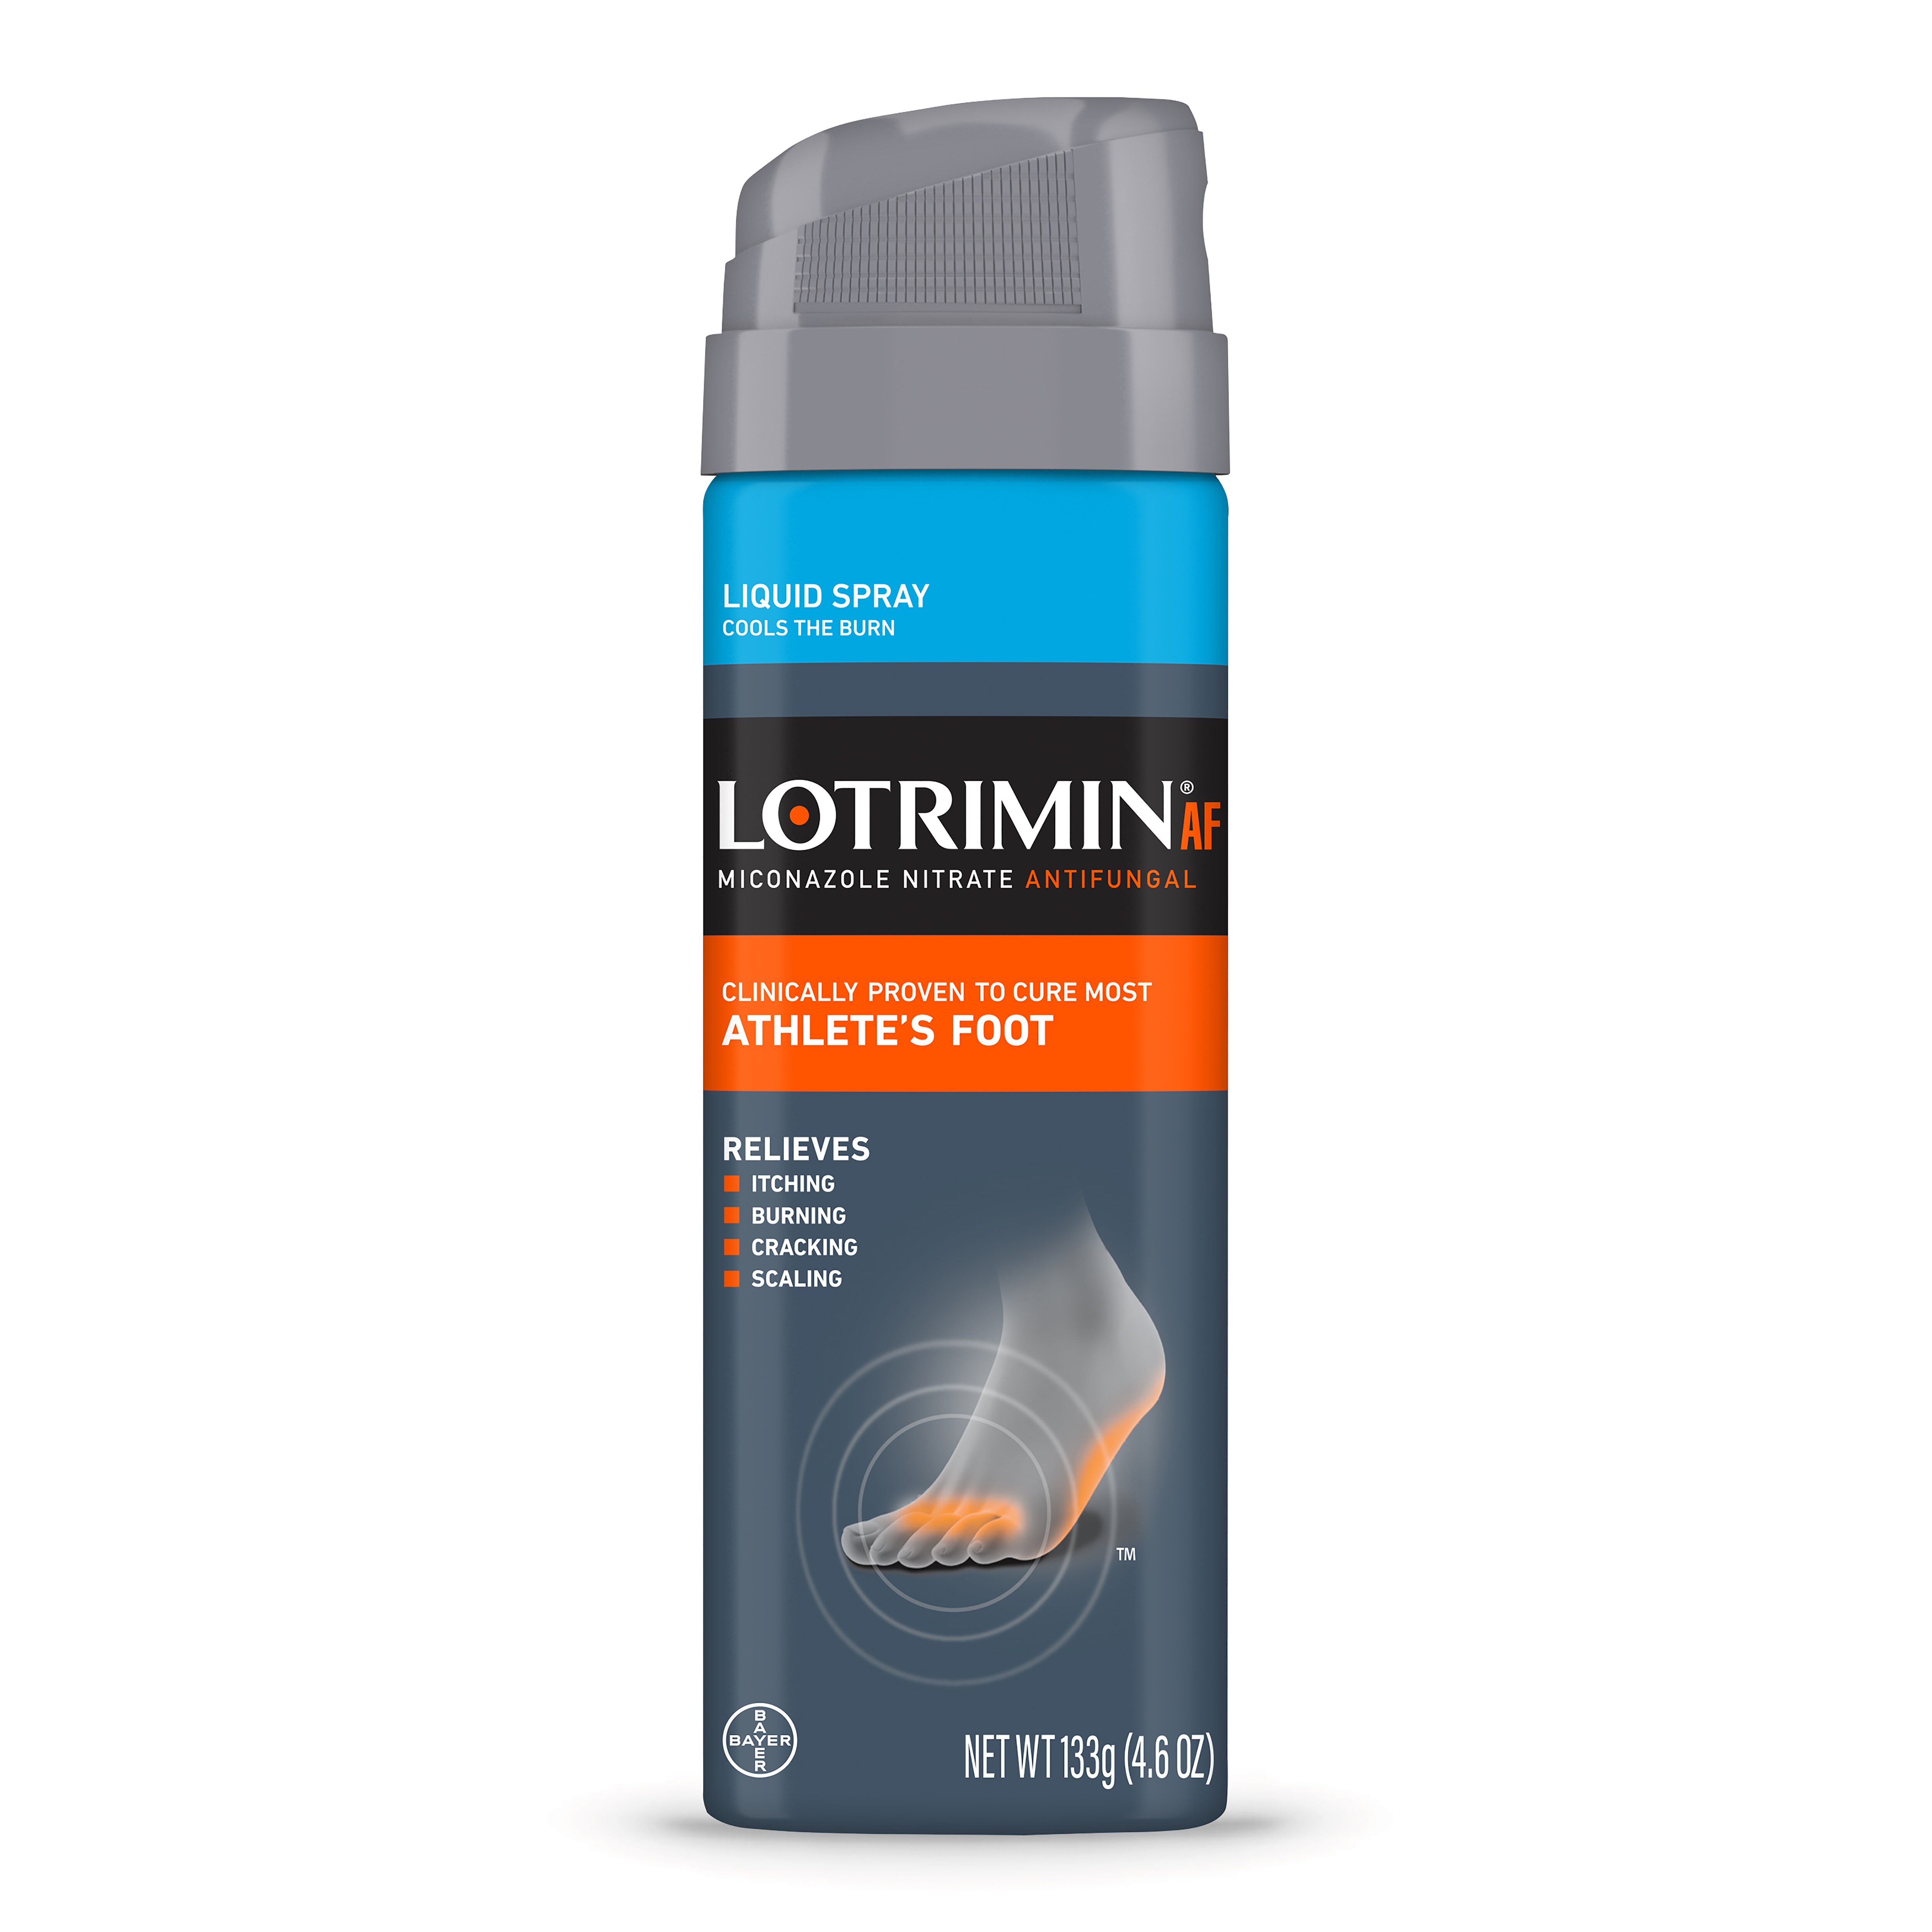  Lotrimin AF Athlete's Foot Liquid Spray, 4.6 OZ Spray Can 